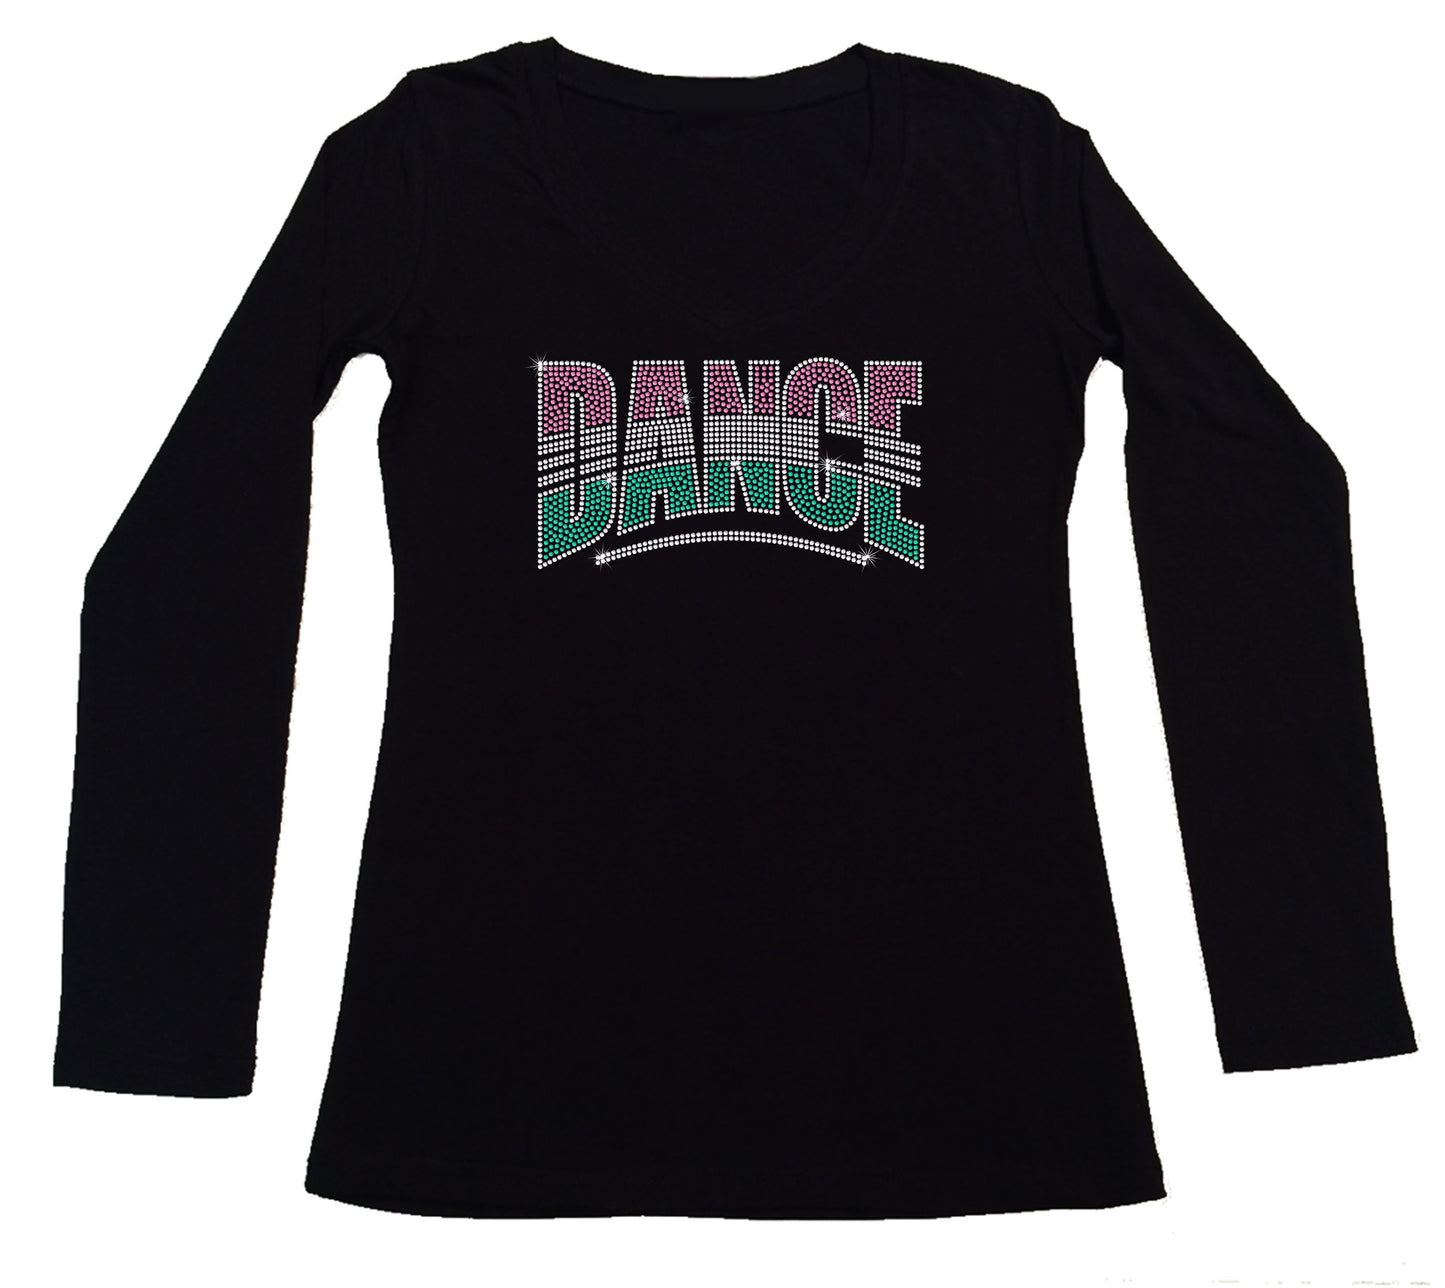 Women's Rhinestone Fitted Tight Snug Shirt Colorful Dance - Dance Shirt, Dancer Bling